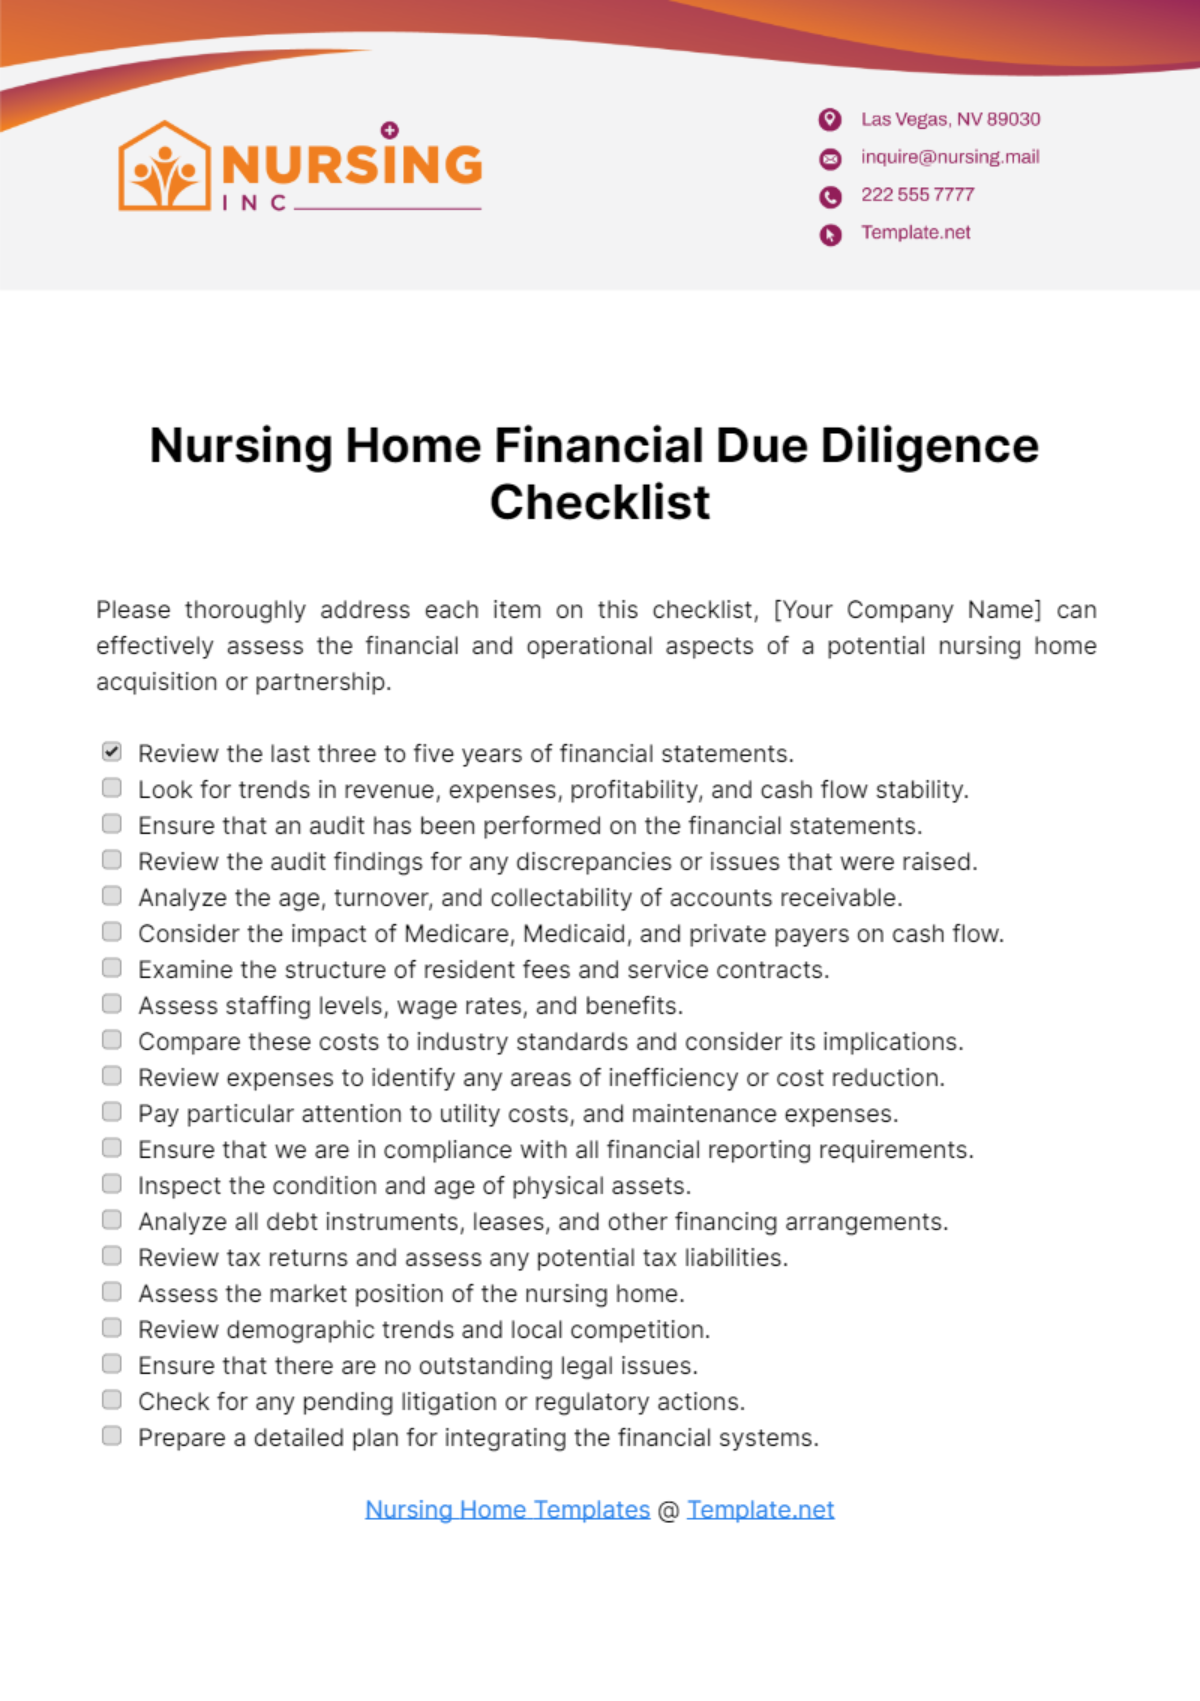 Nursing Home Financial Due Diligence Checklist Template